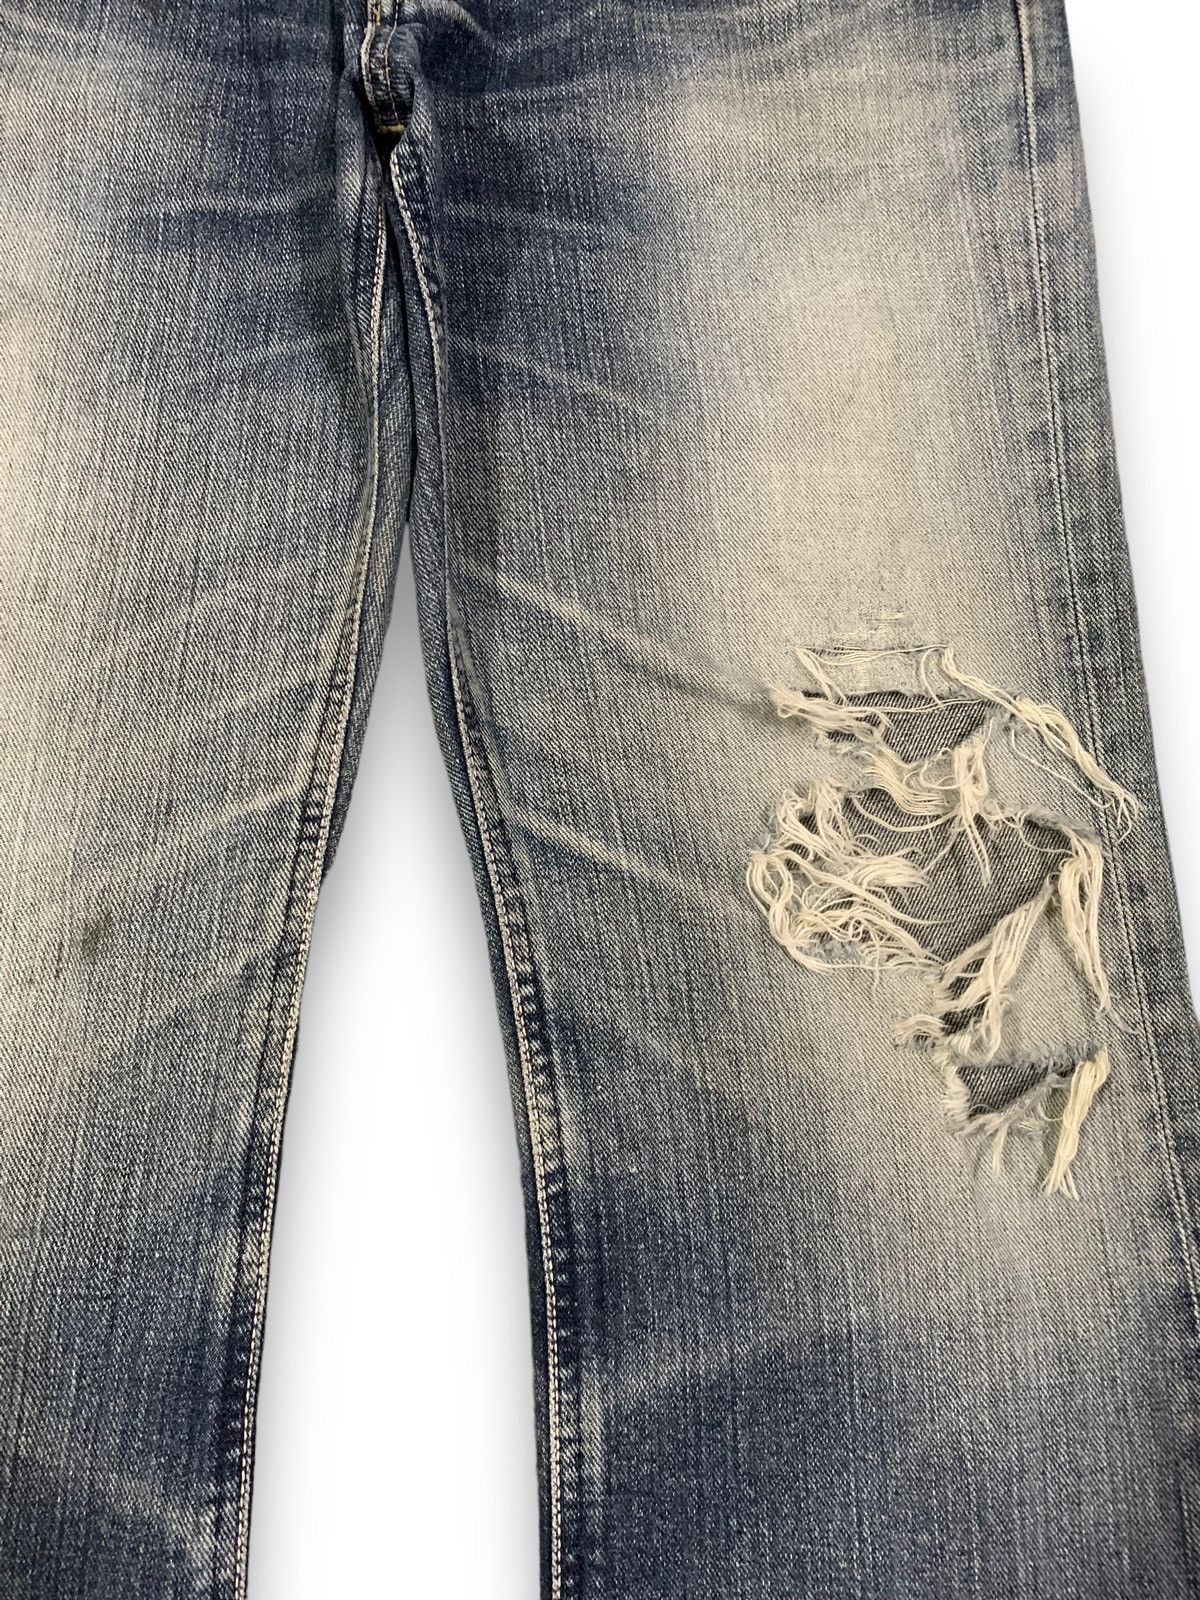 Lee Vintage Lee Cowboy Sanforized Distressed Flared Jeans Size US 31 - 8 Thumbnail